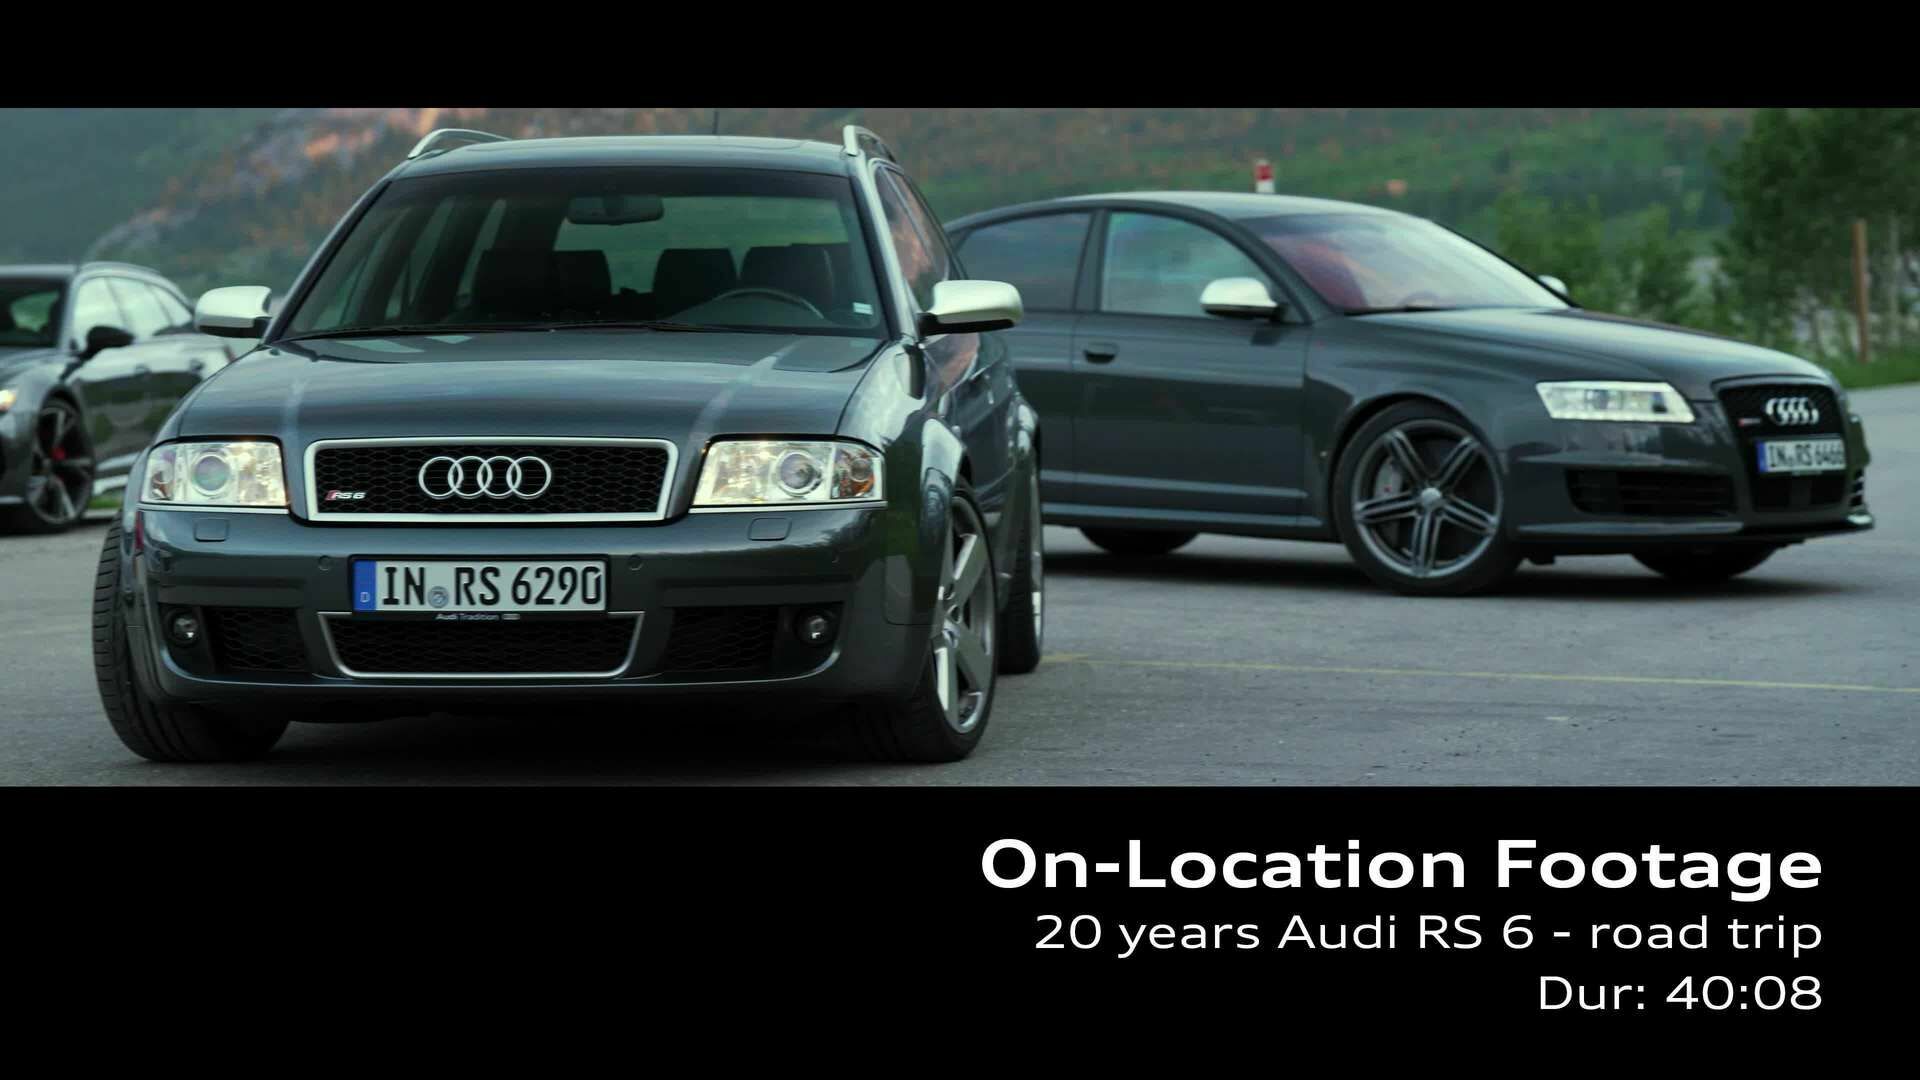 20th anniversary Audi RS 6